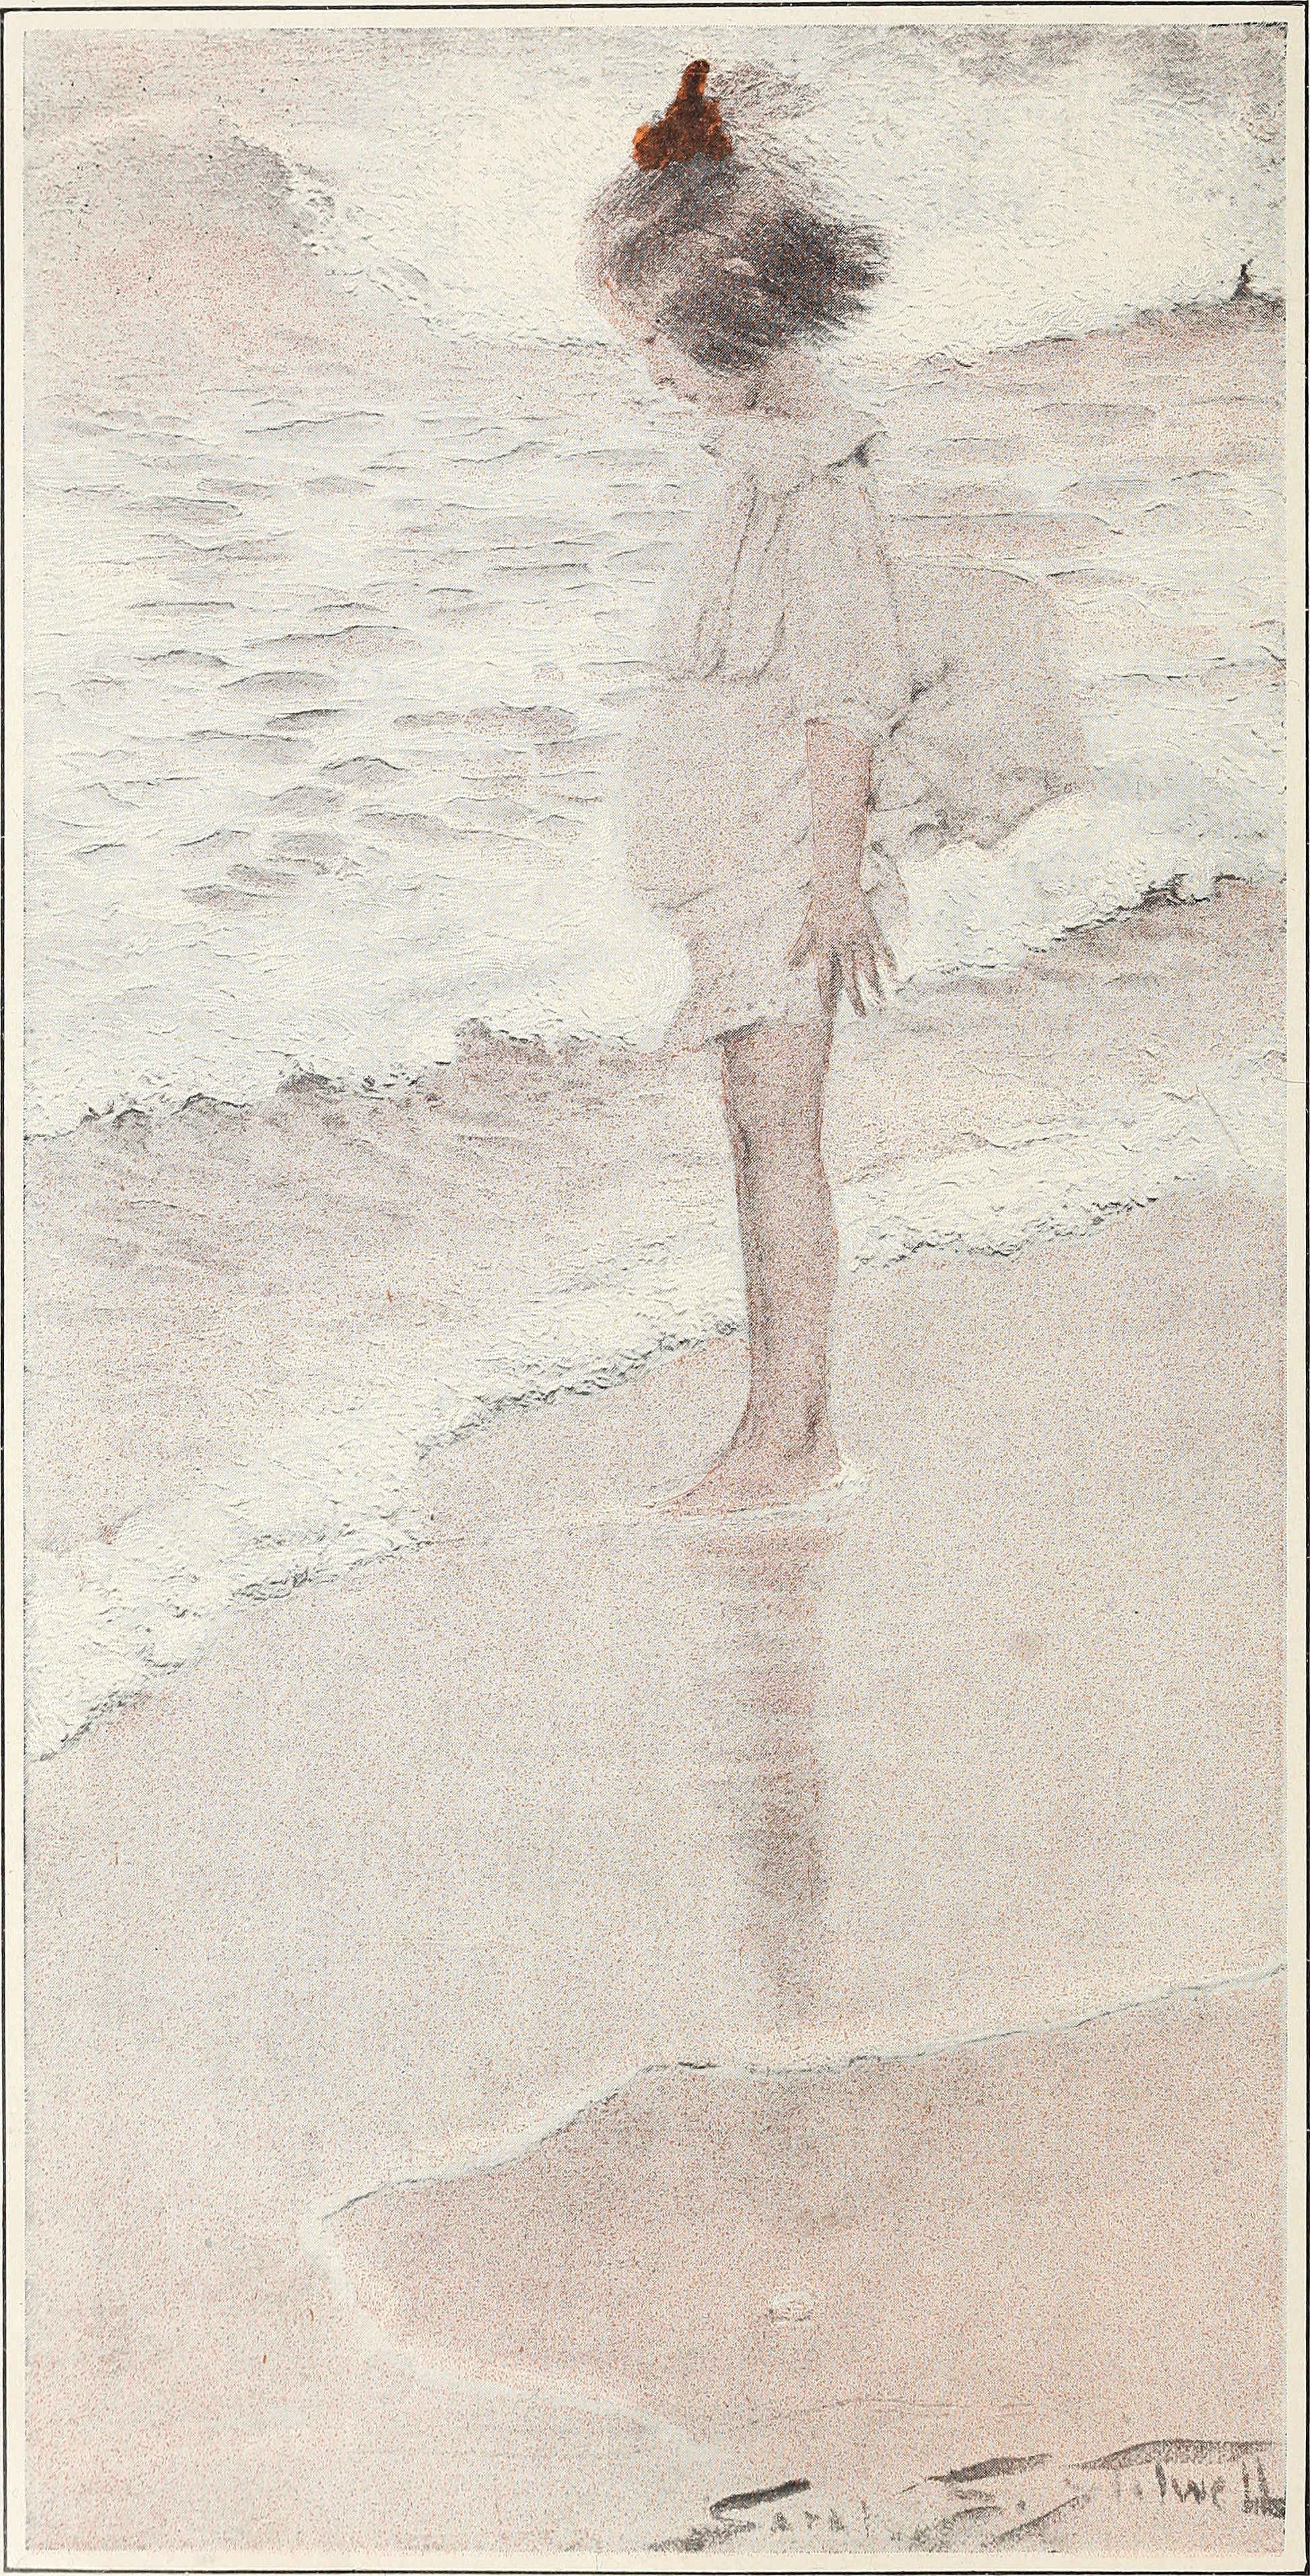 "In paddling" (1901) | Vintage bathroom prints | Sarah S. Stilwell Posters, Prints, & Visual Artwork The Trumpet Shop   